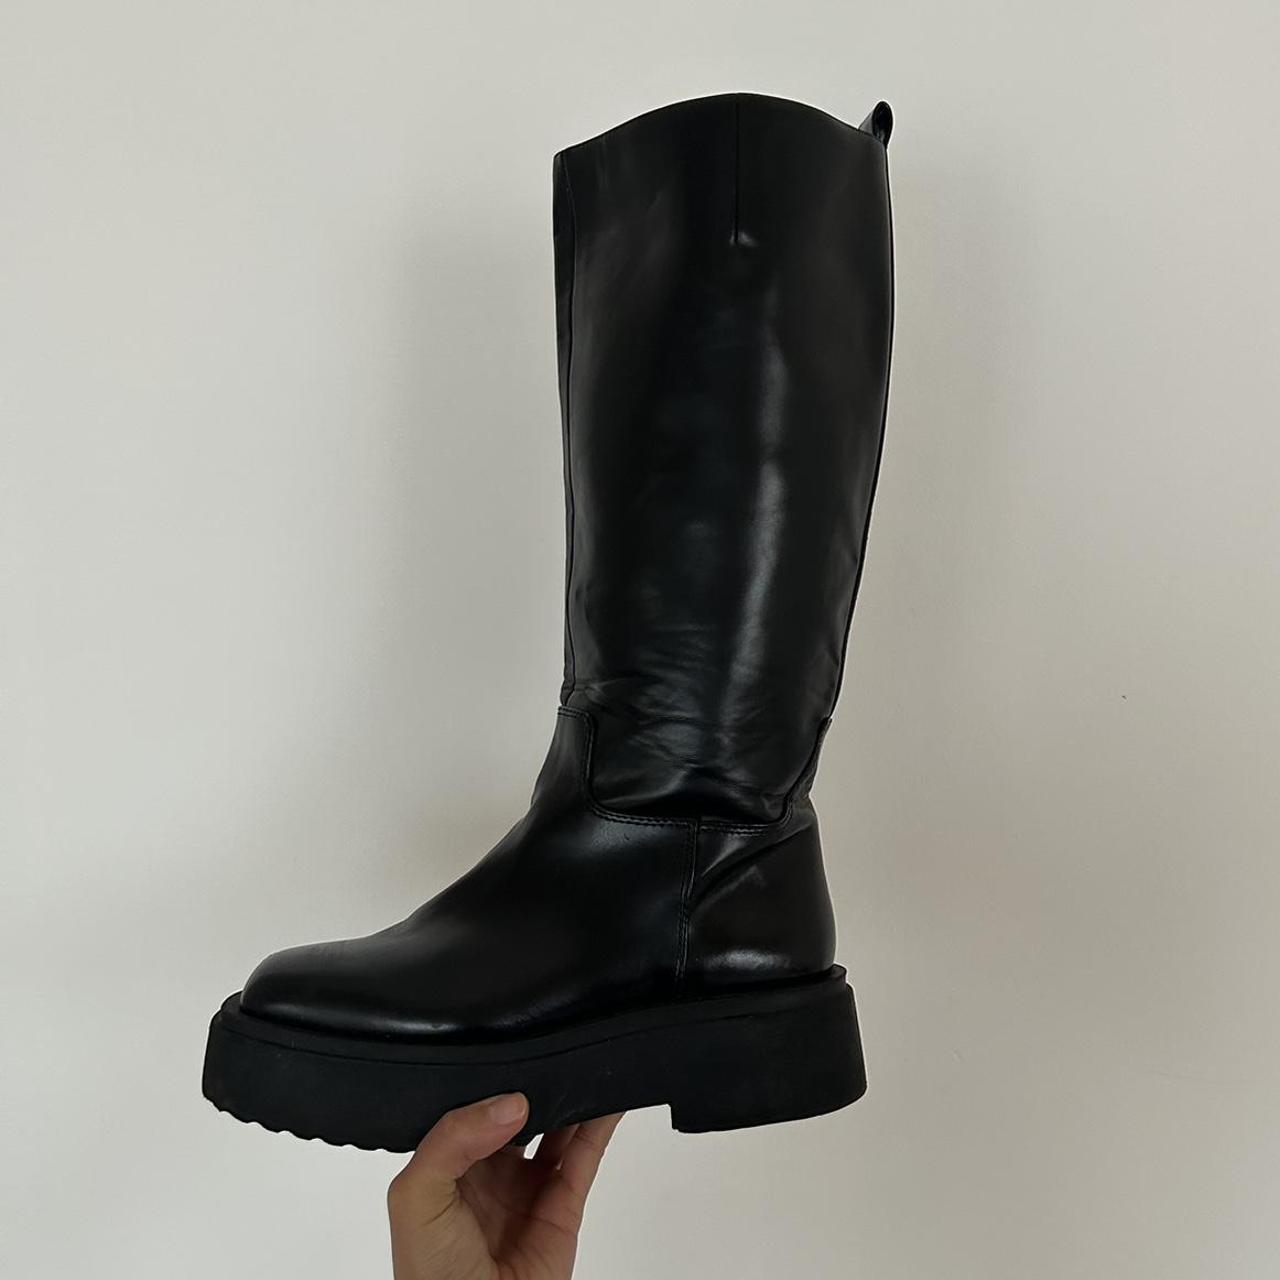 H&M studio black high knee boots in size EU 40 Worn... - Depop